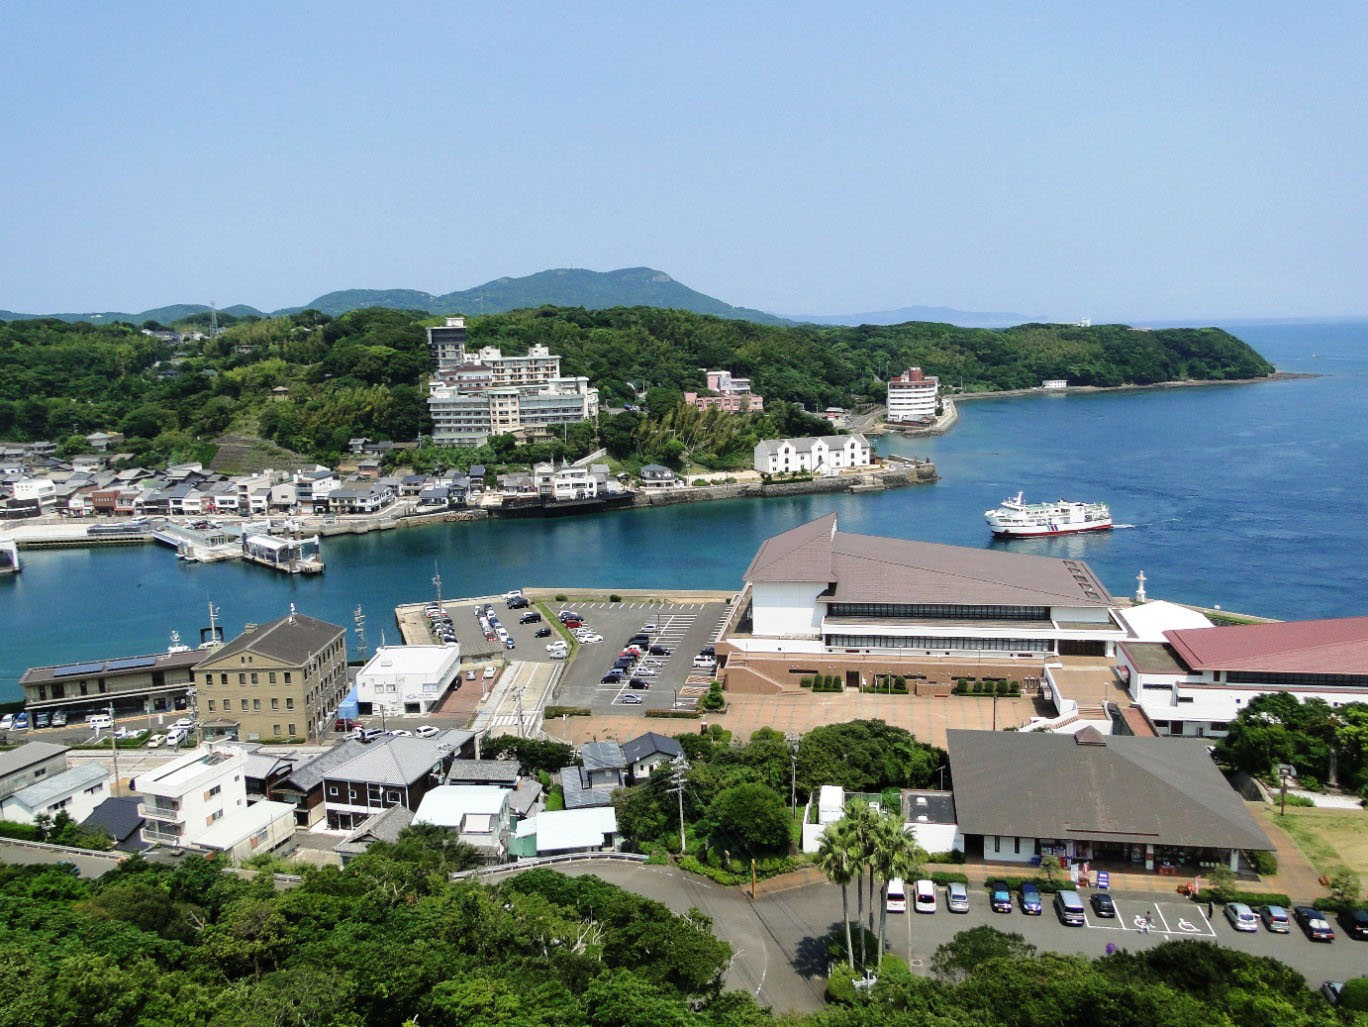 Island life: The view of the port from Hirado Castle. | MANDY BARTOK